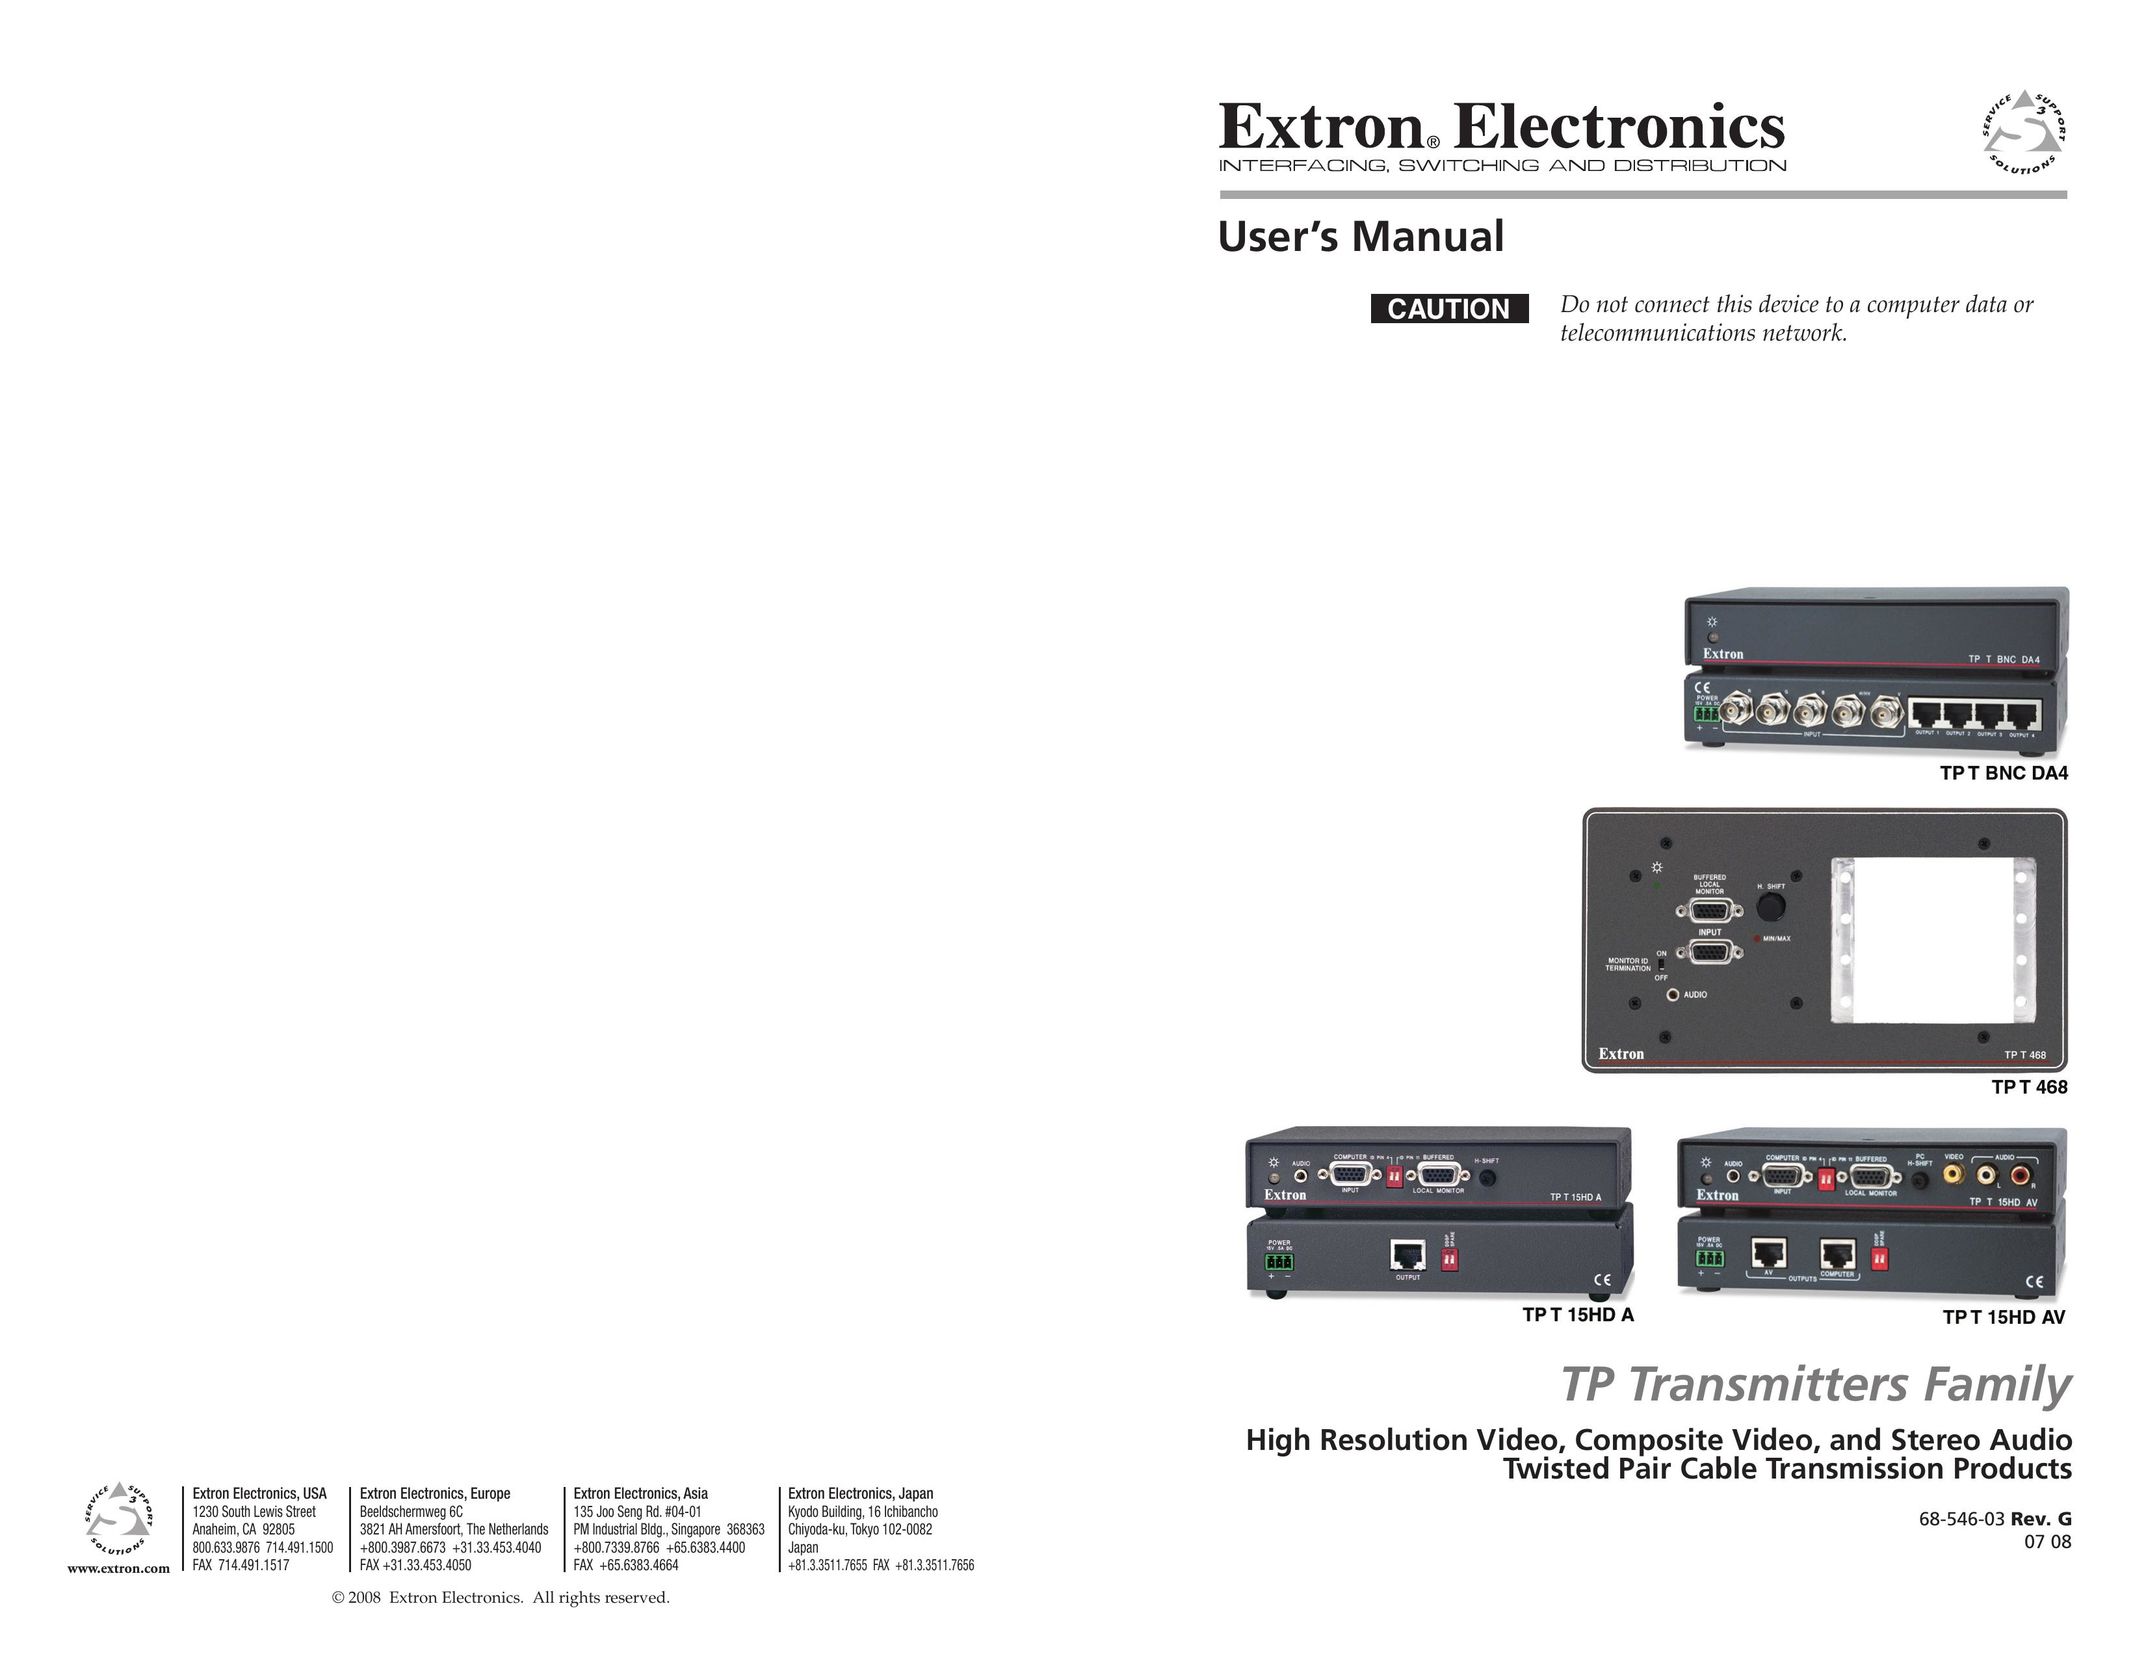 Extron electronic TP T BNC DA4 Satellite Radio User Manual